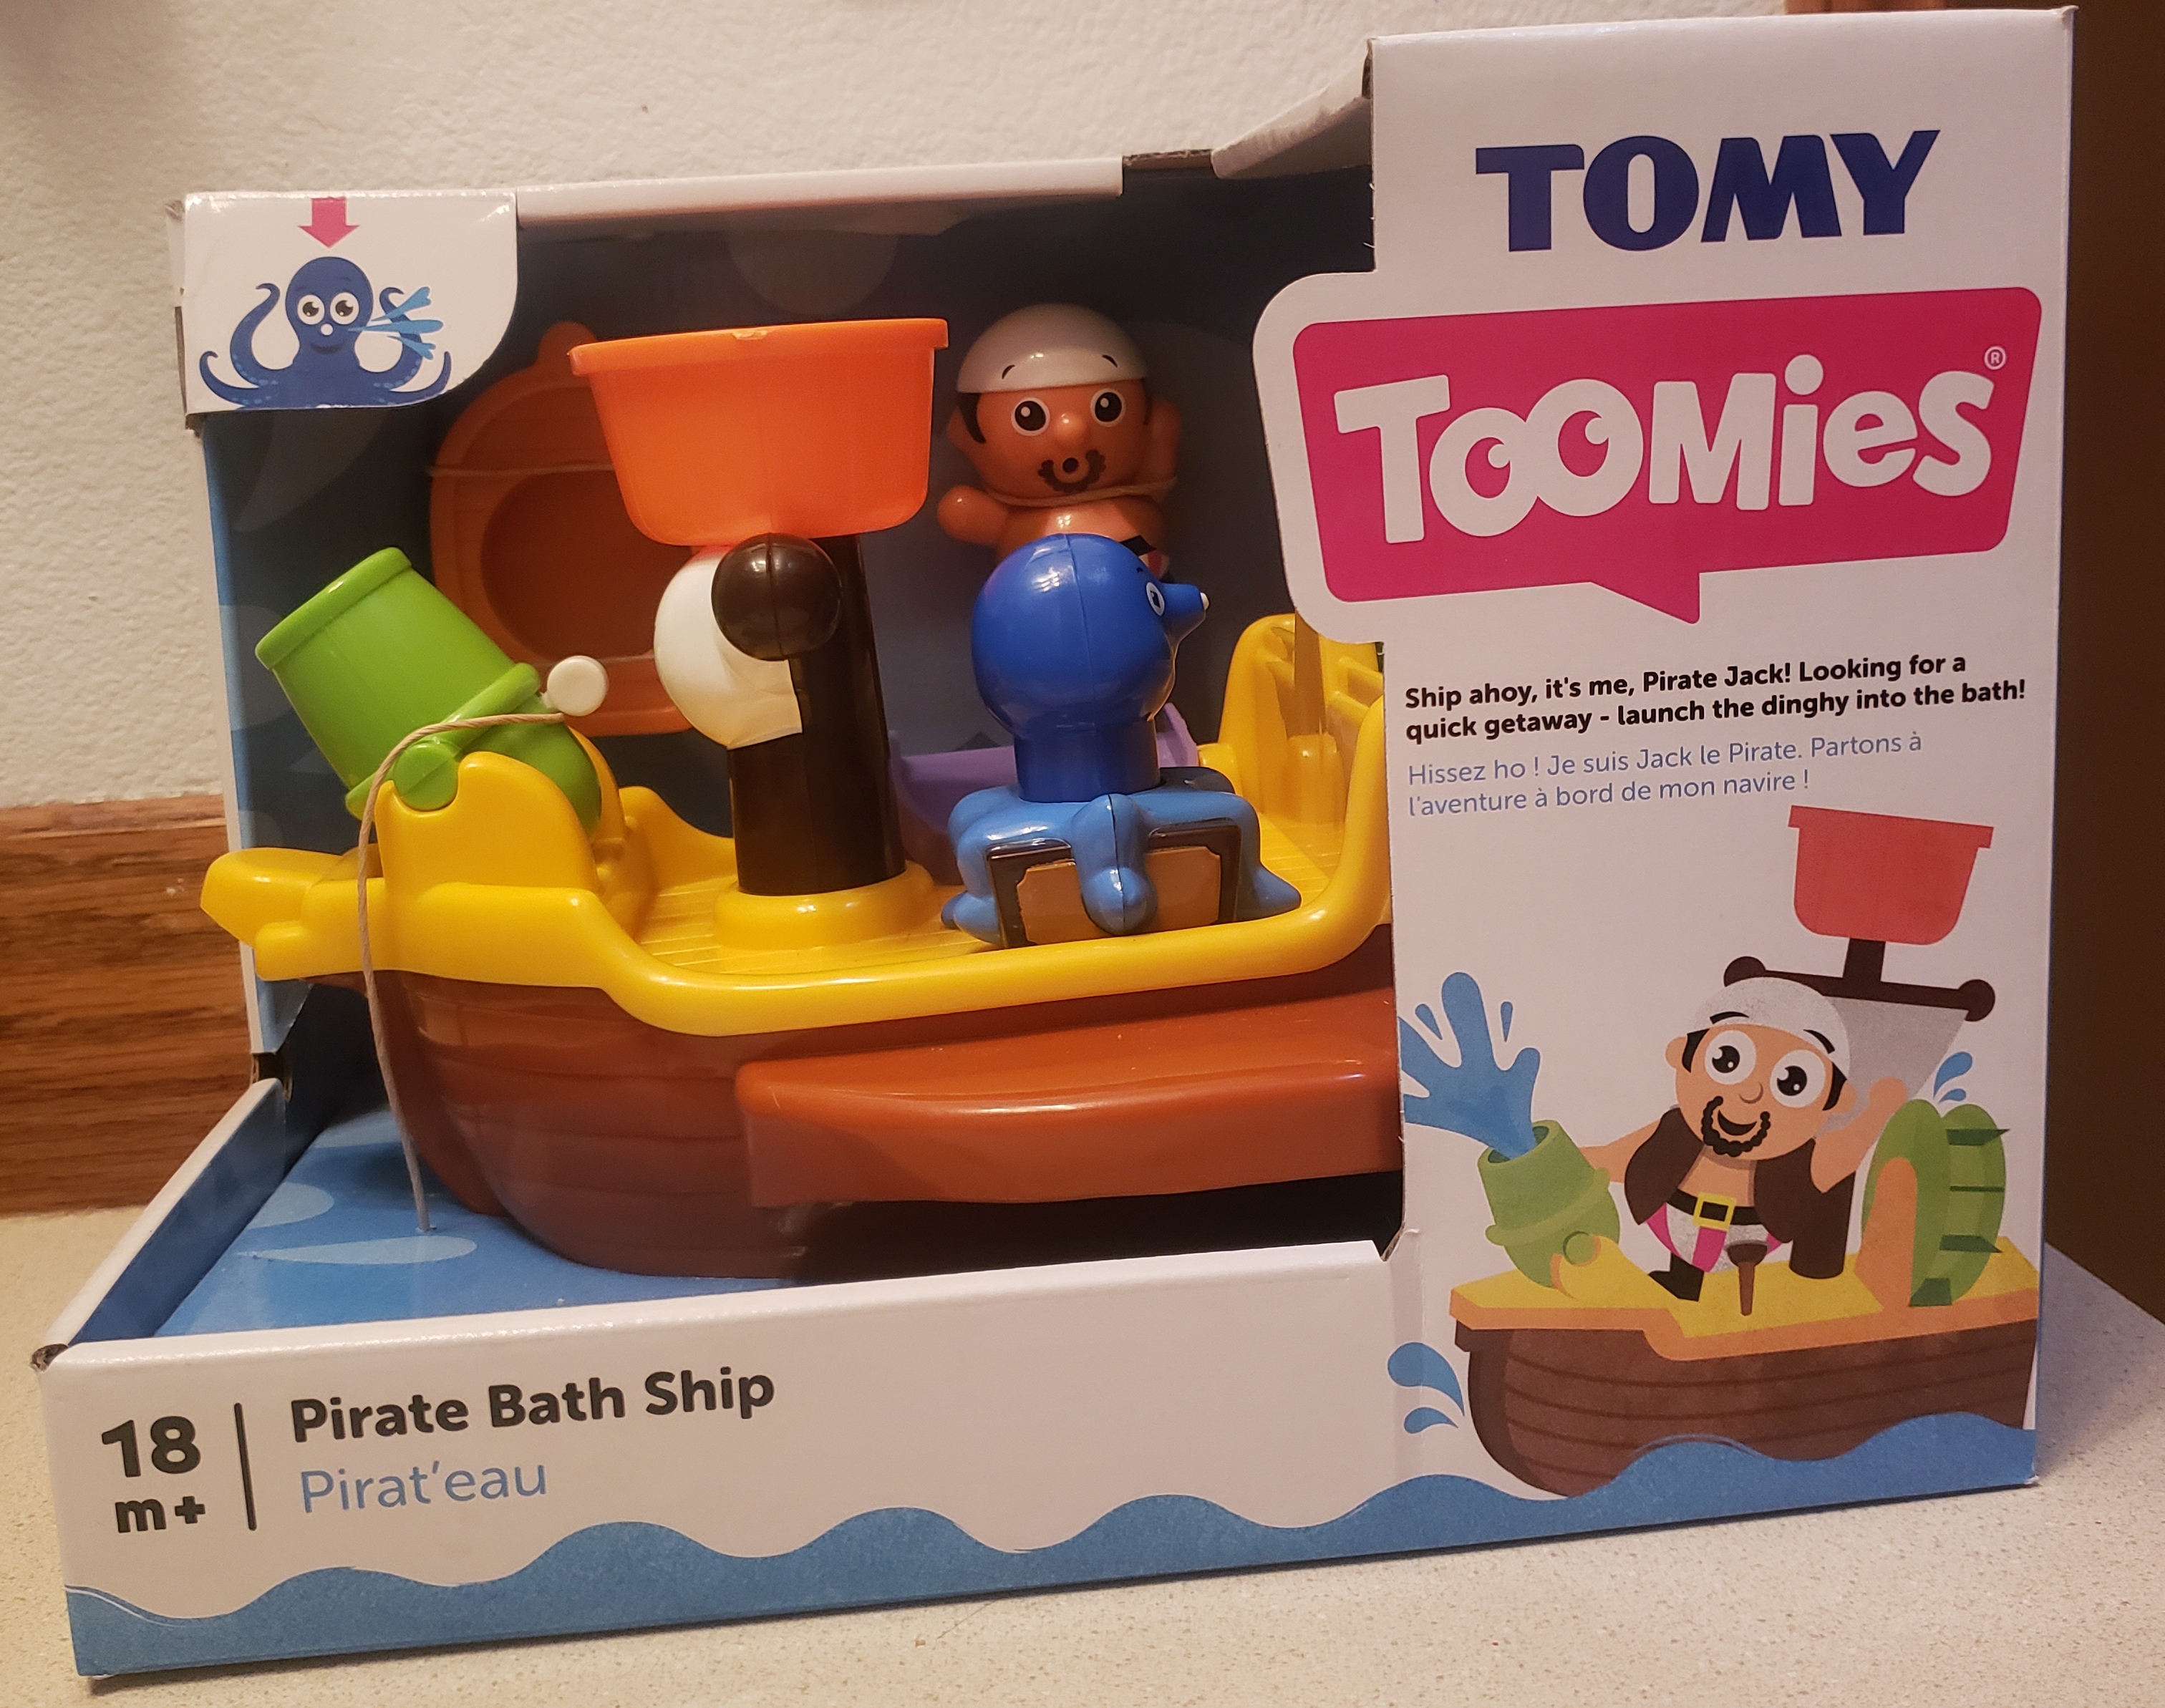 Water play for age 18 mths+ Pirate Bath Ship TOMY TOOMIES Bath time fun 